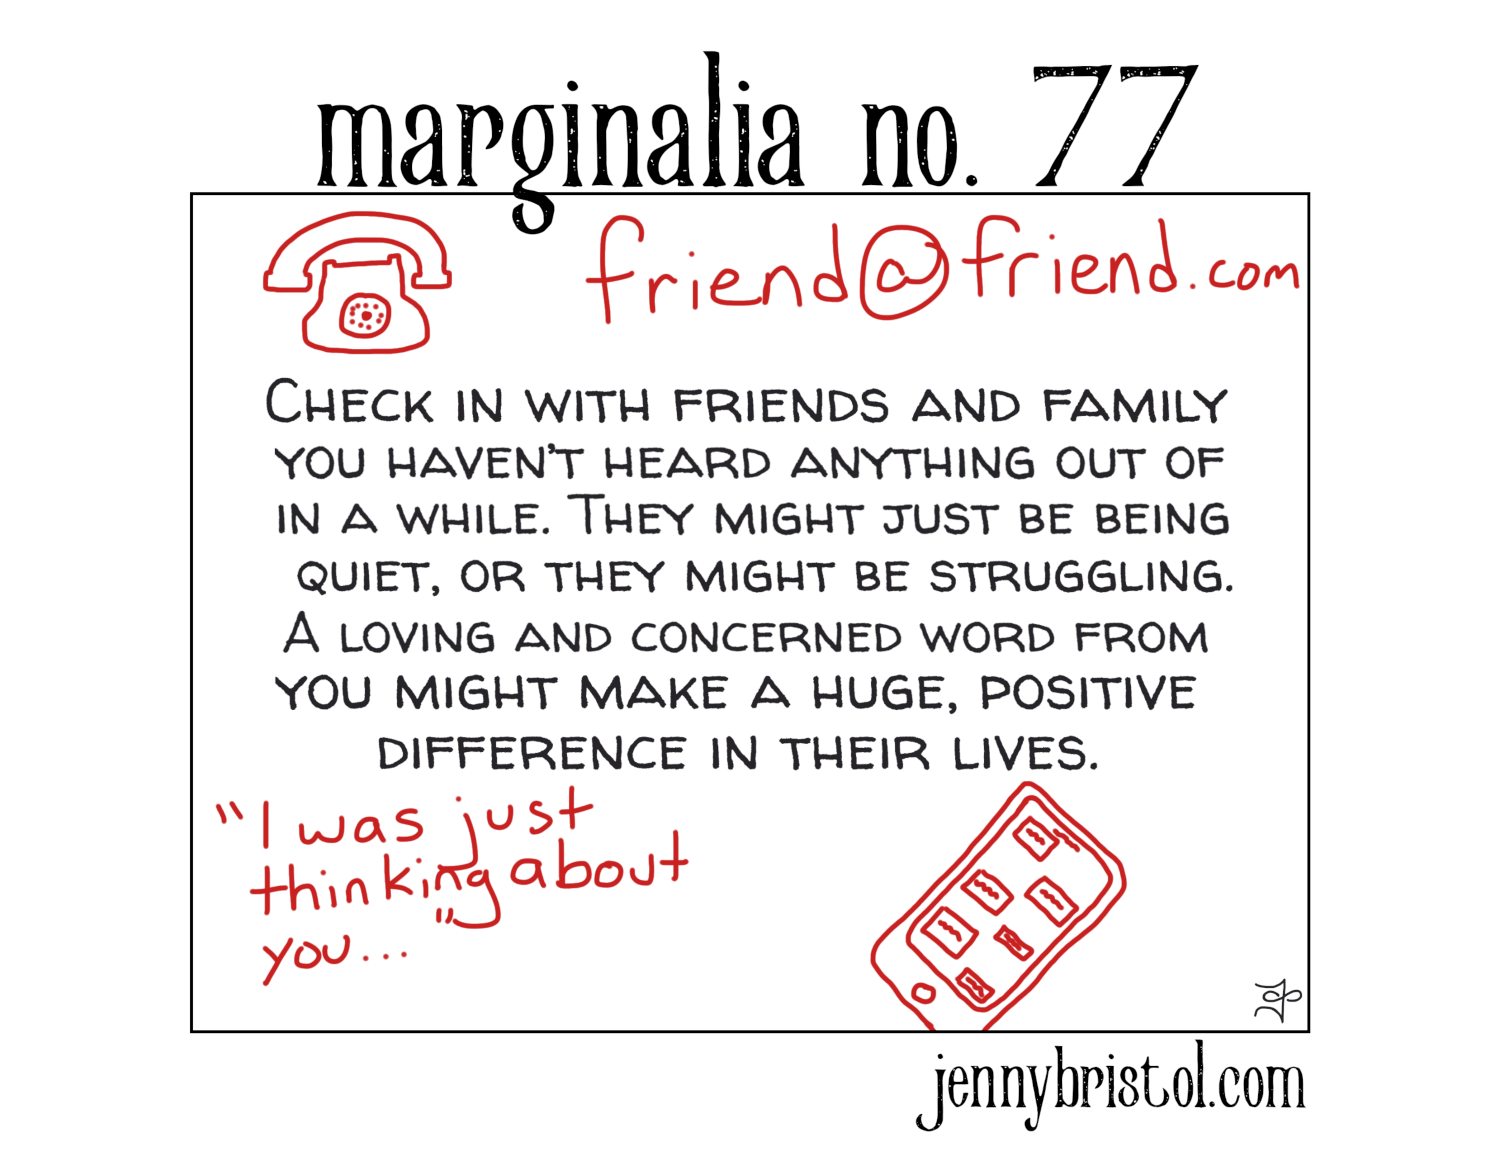 Marginalia No. 77 to post